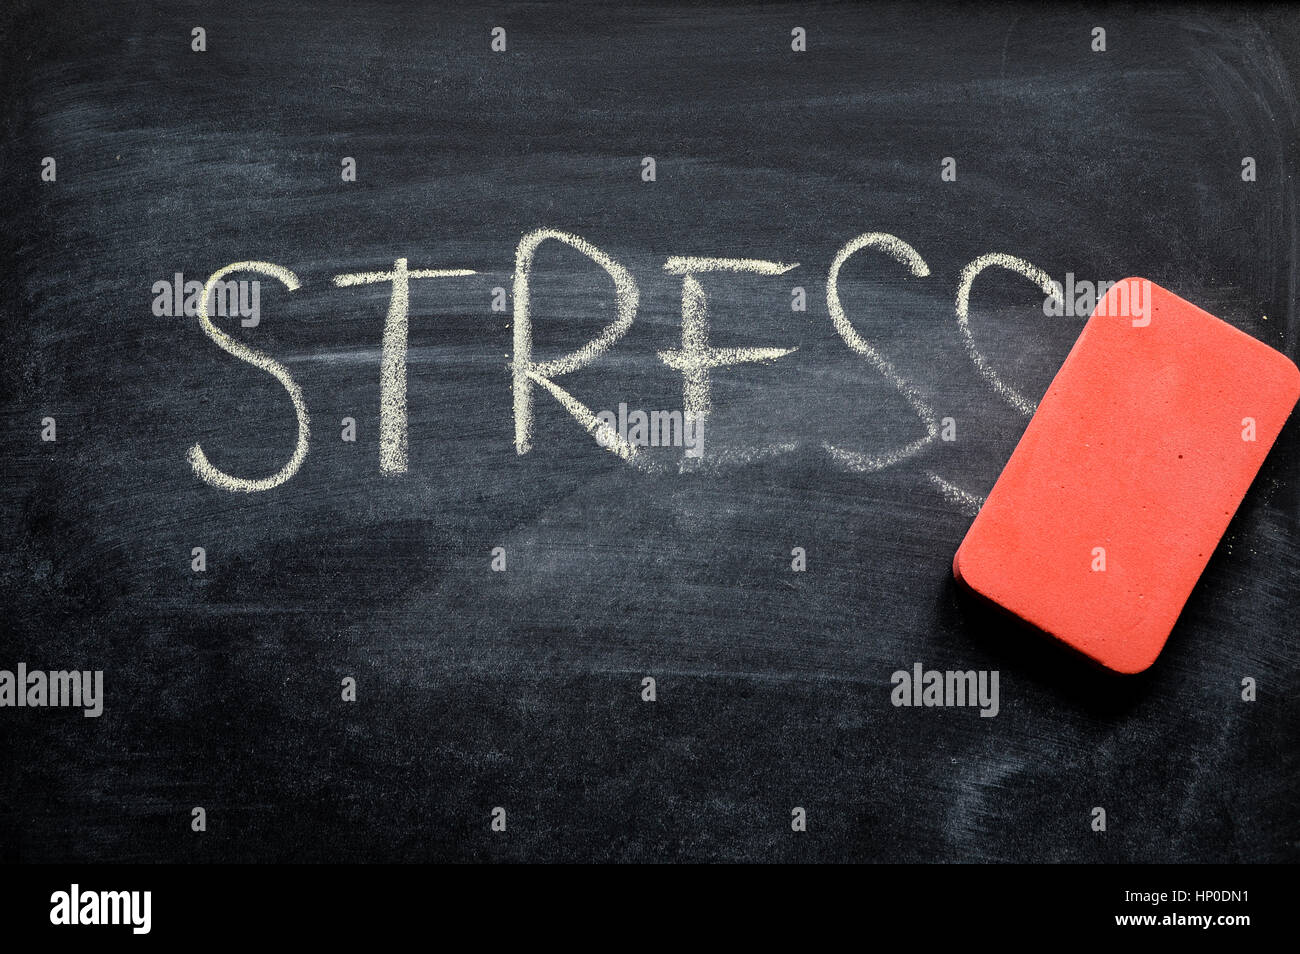 erasing stress, hand written word on blackboard being erased concept Stock Photo